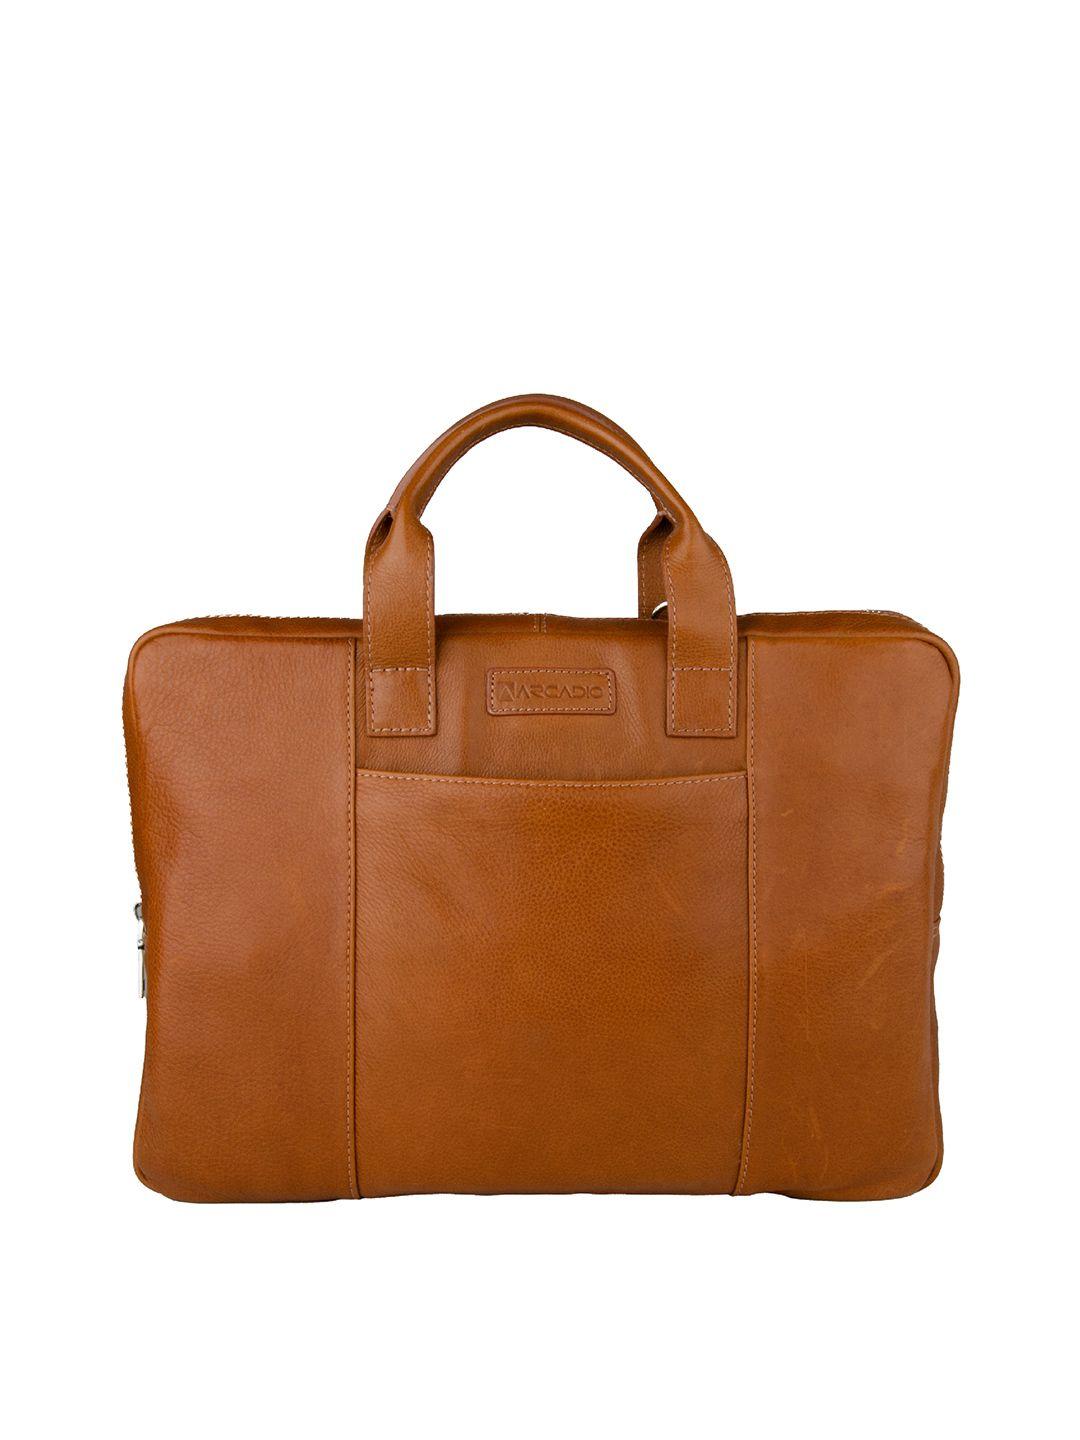 arcadio unisex tan & gold-toned textured leather laptop bag